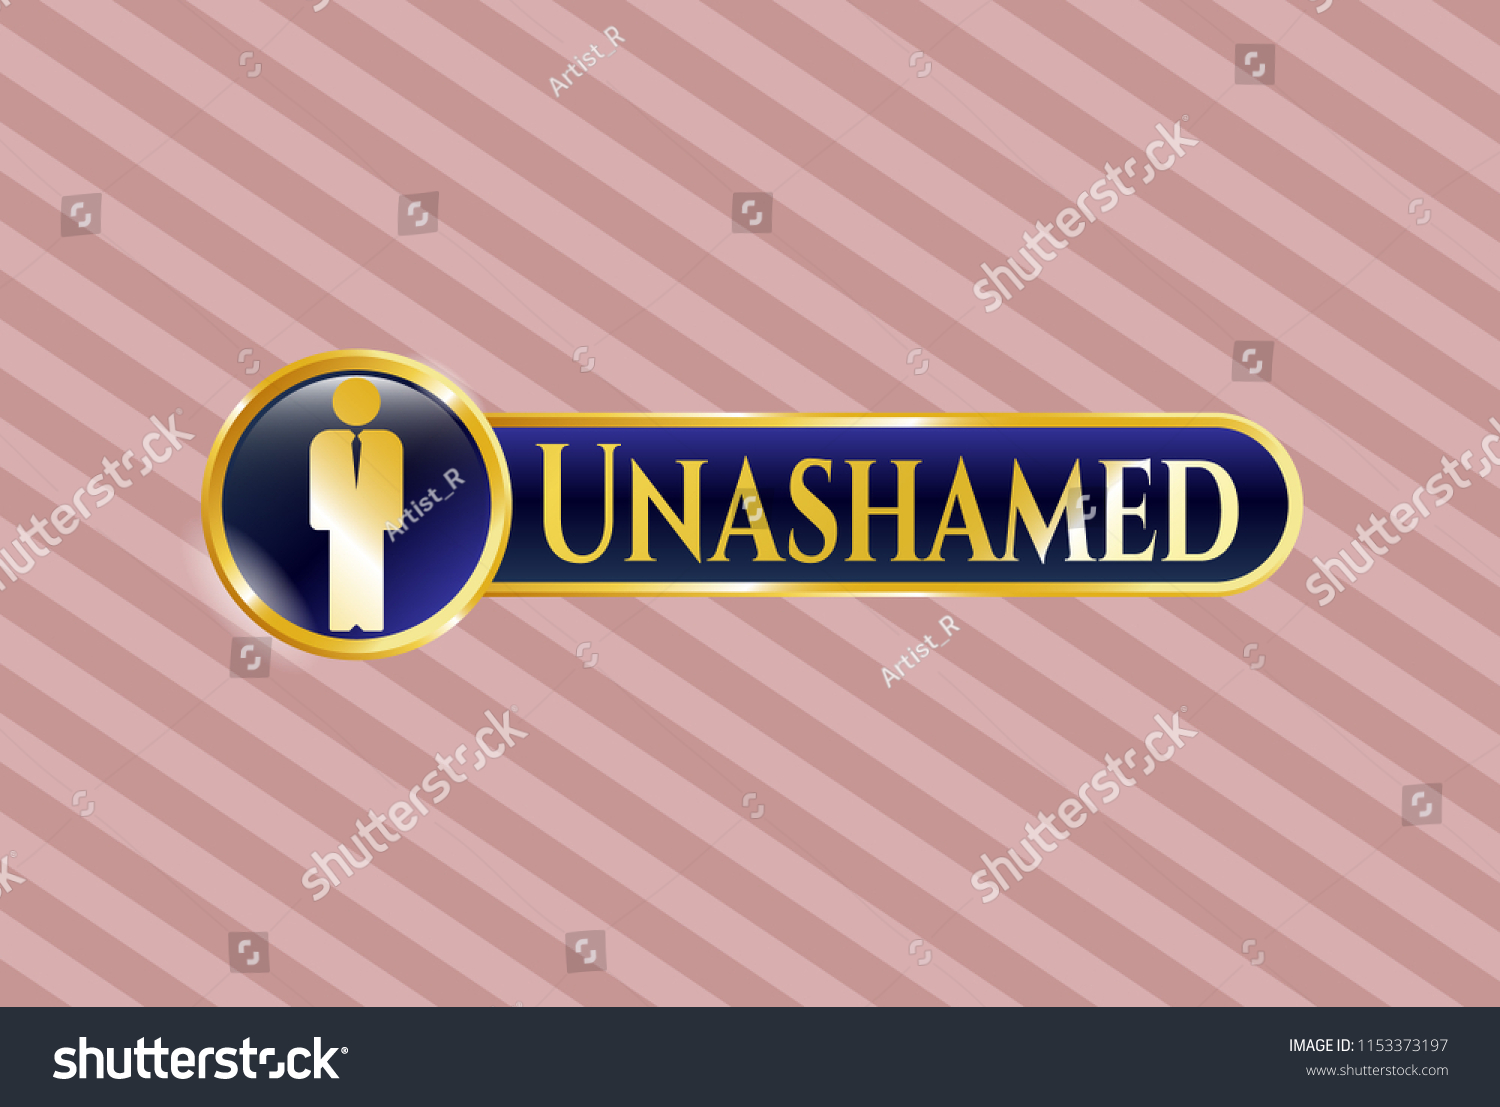 R/Unashamed